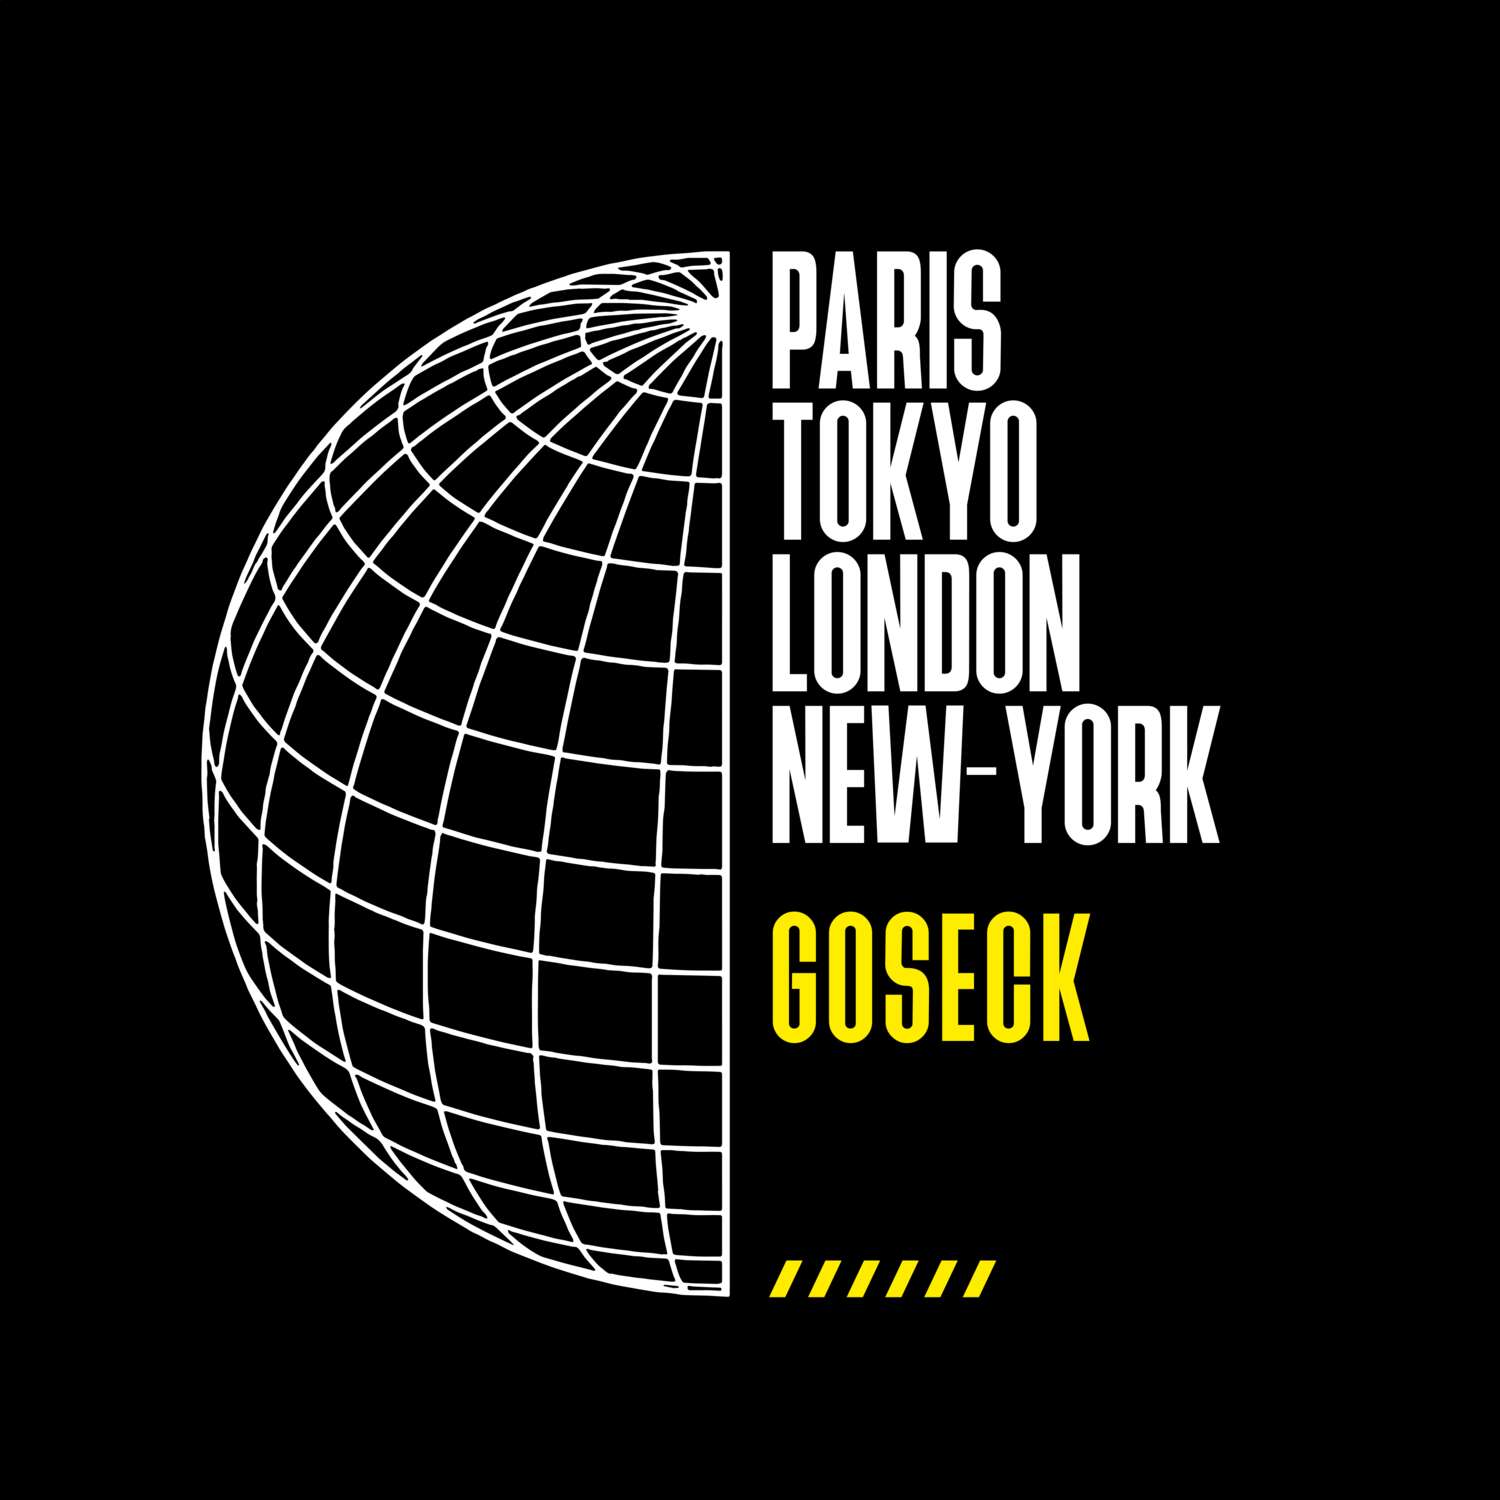 Goseck T-Shirt »Paris Tokyo London«